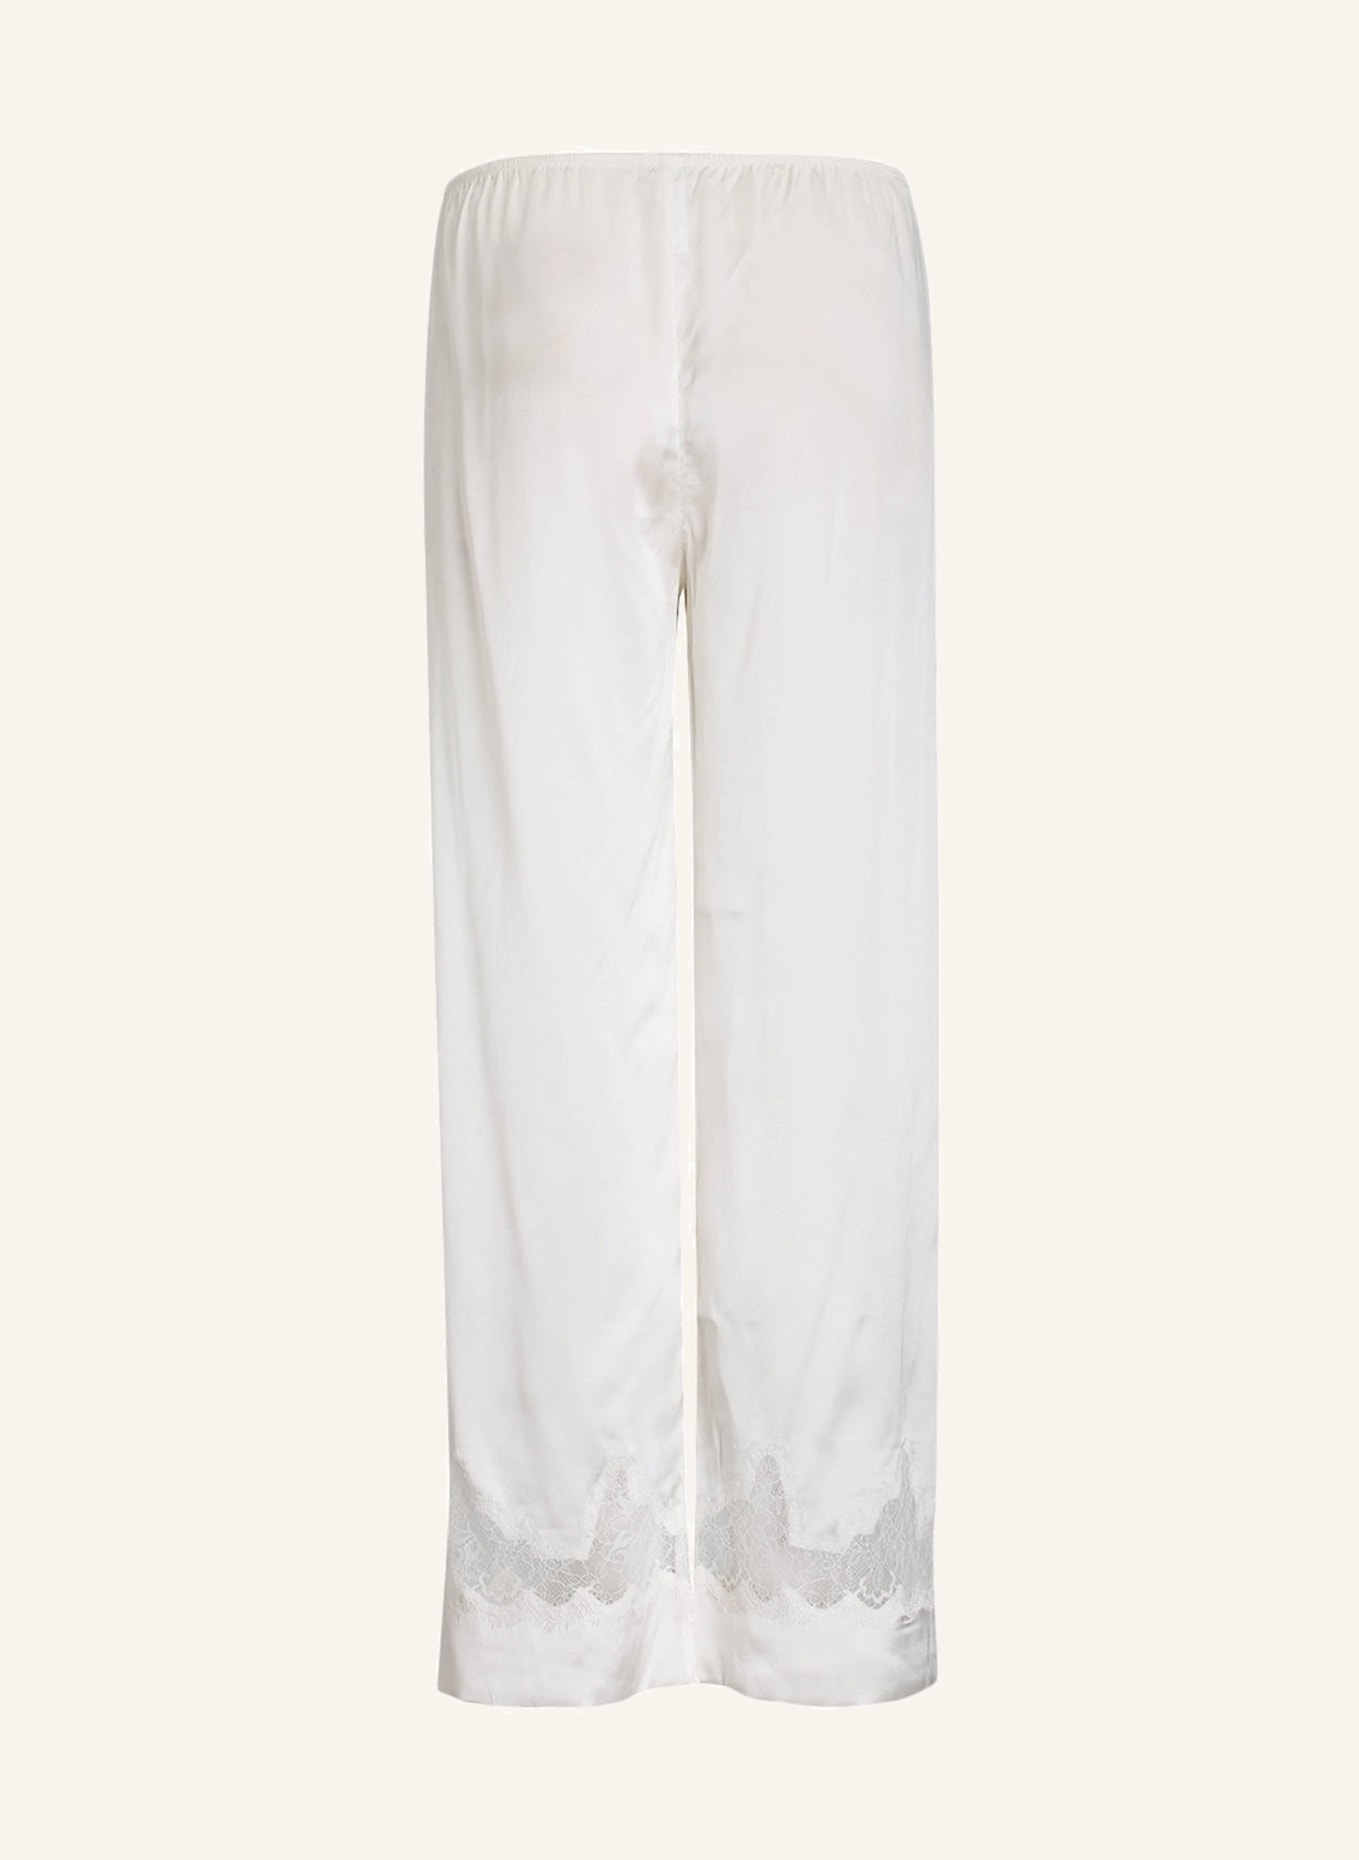 SIMONE PÉRÈLE Pajama pants NOCTURNE made of silk, Color: IVORY (Image 2)